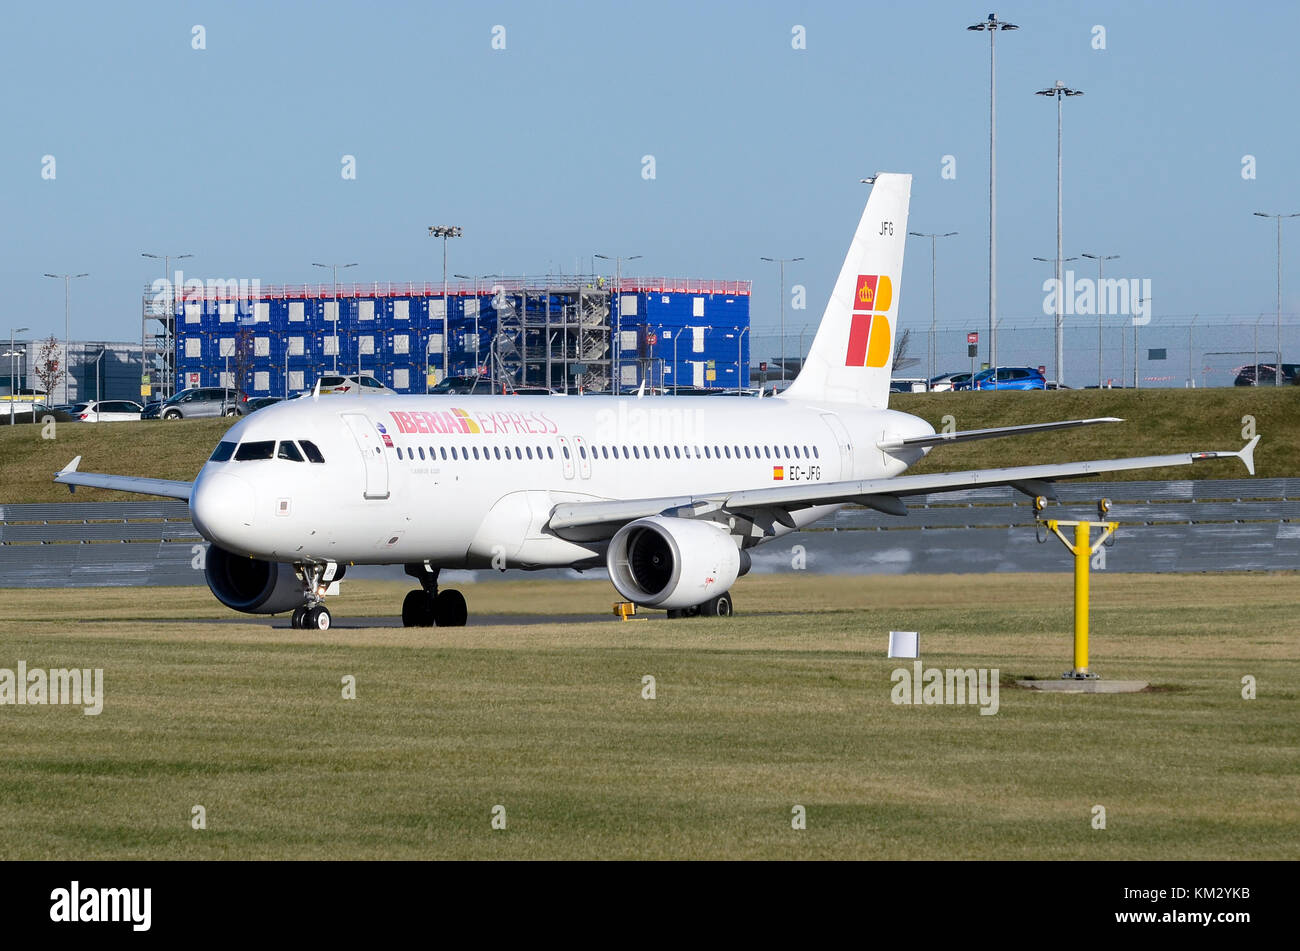 Airbus A320, Iberia Express, l'aéroport de Birmingham, Royaume-Uni. Airbus A320-214 EC-JFG est vu circuler le décollage. Banque D'Images